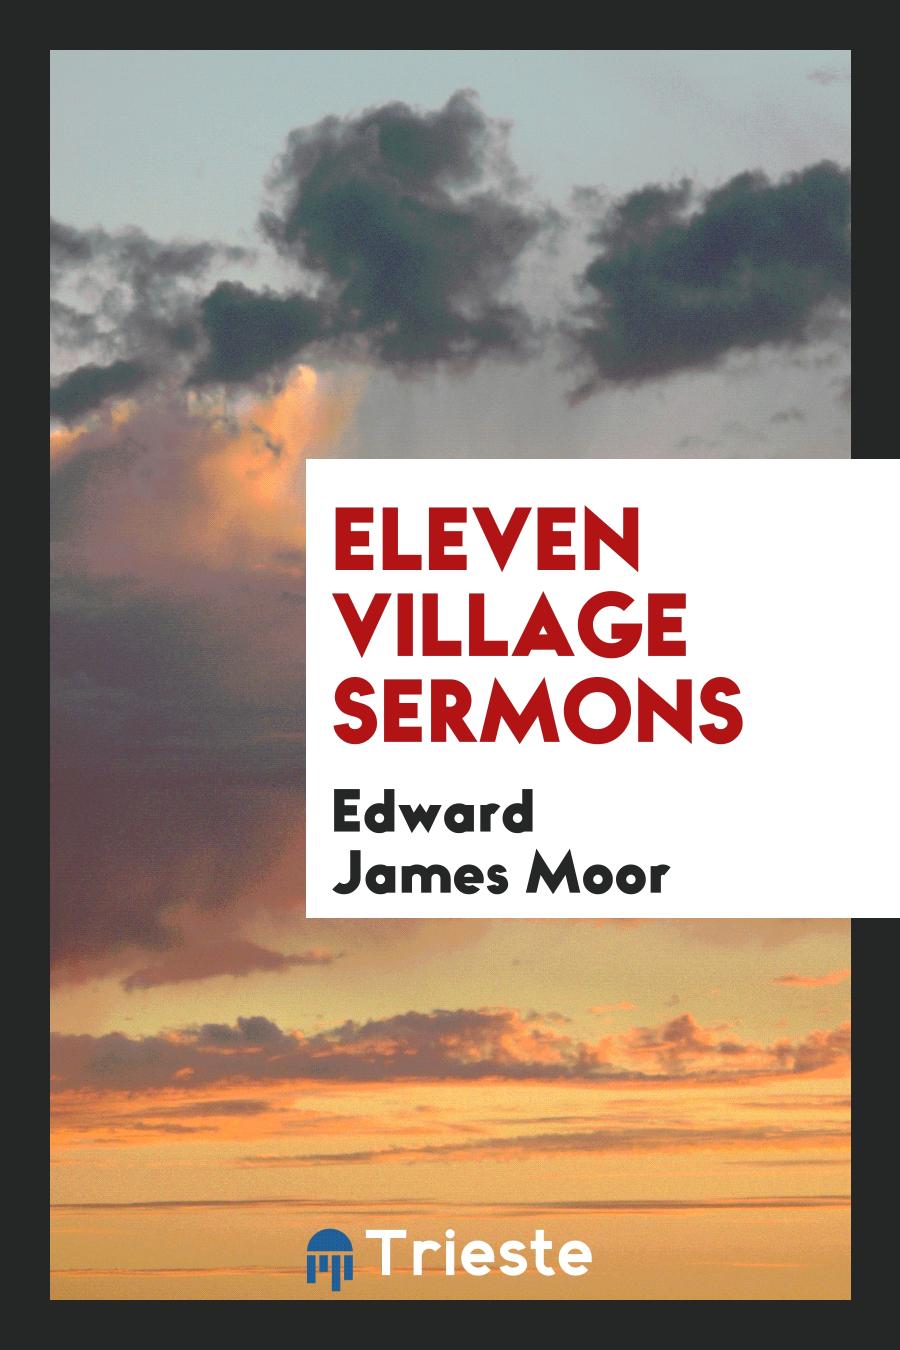 Edward James Moor - Eleven Village Sermons